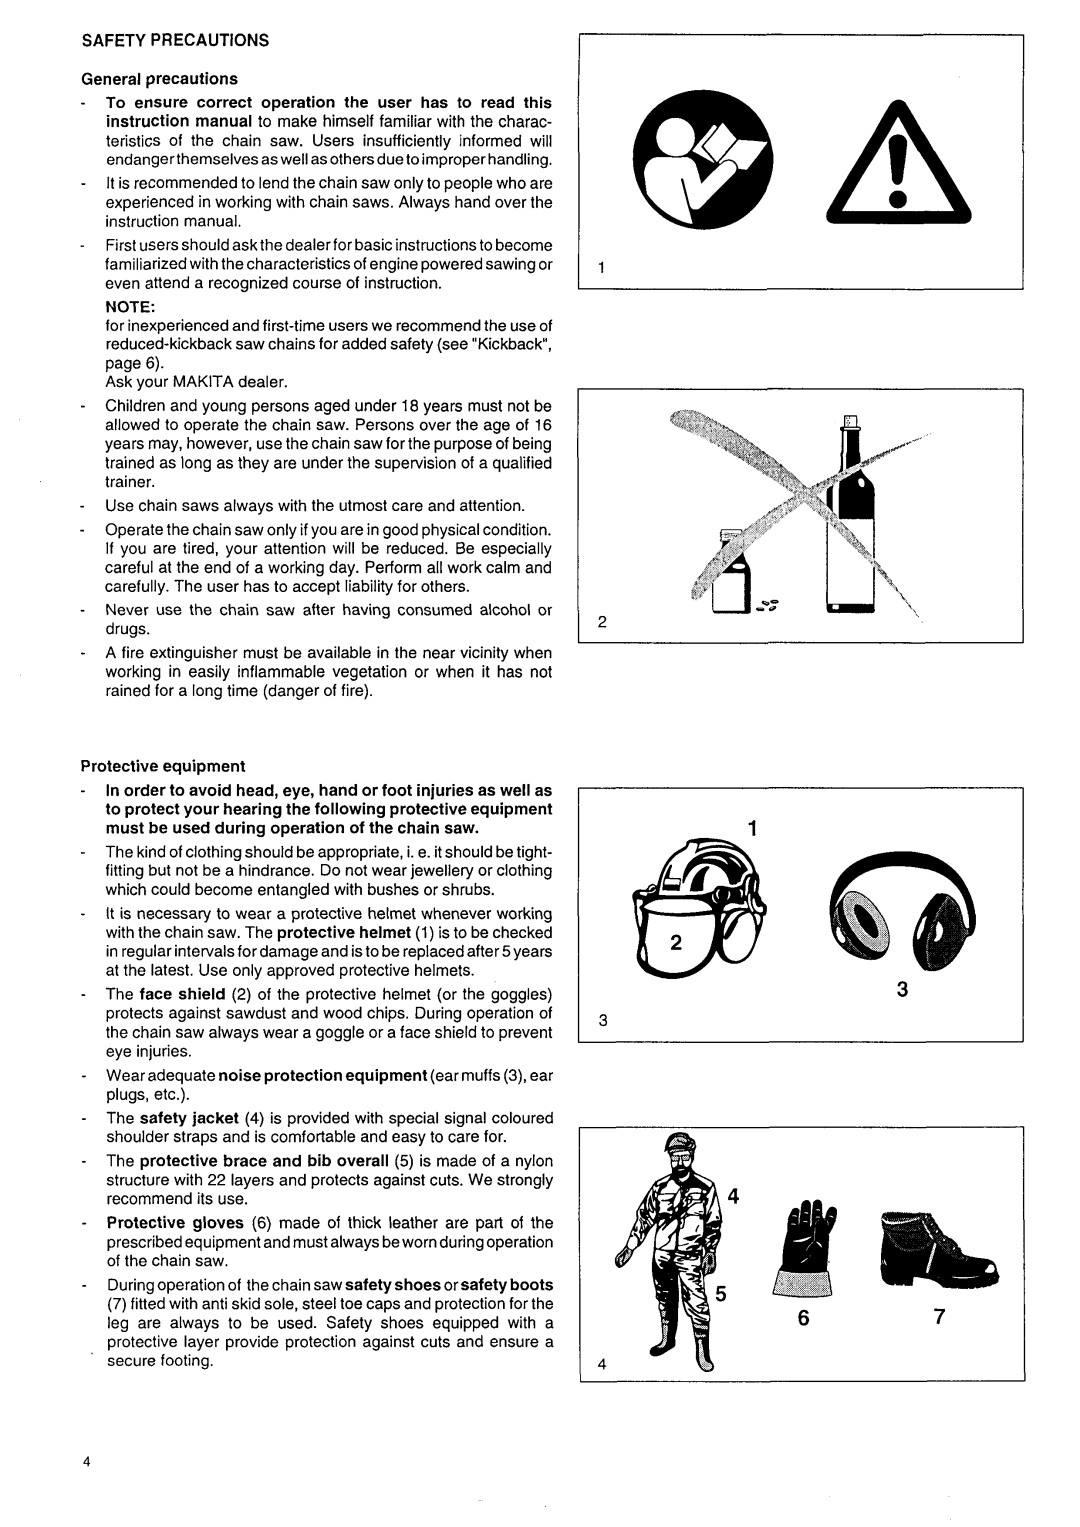 Makita DCS 9000 manual Safety Precautions, General precautions, Protective equipment 